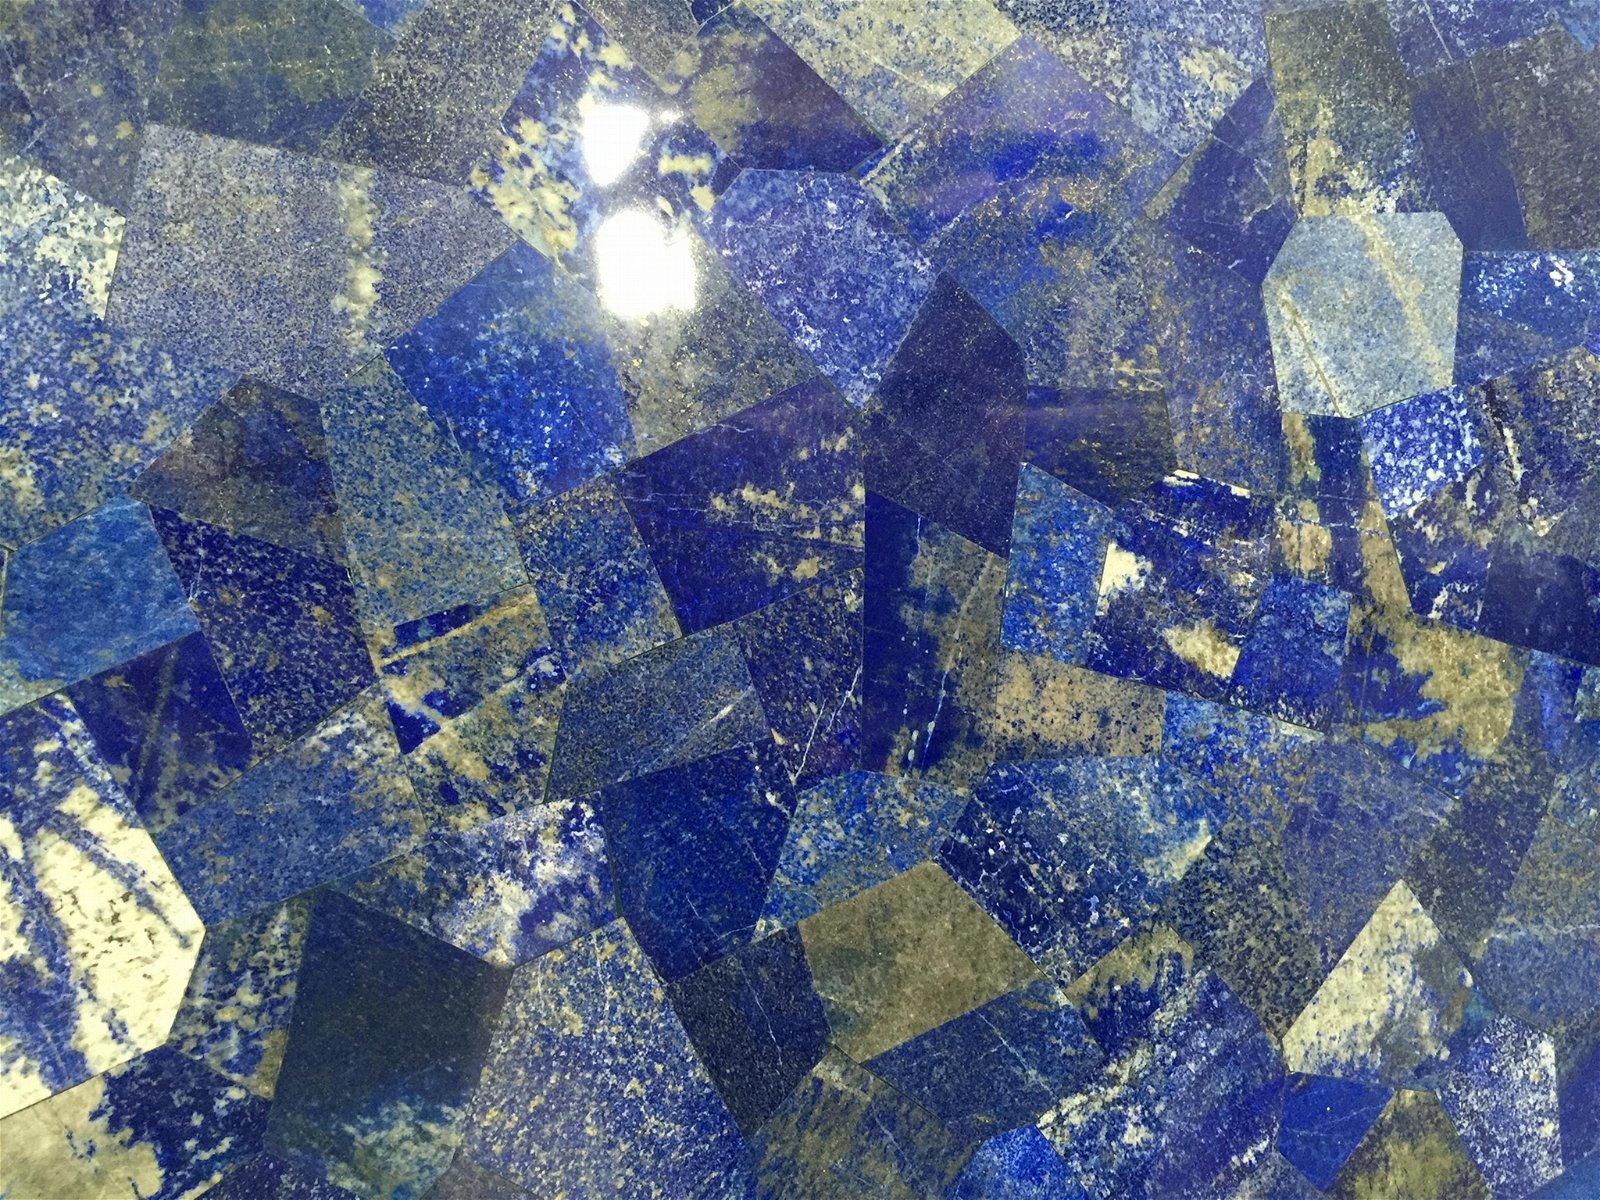 Lapis Lazuli Slab Yuanzhen China Manufacturer Countertop